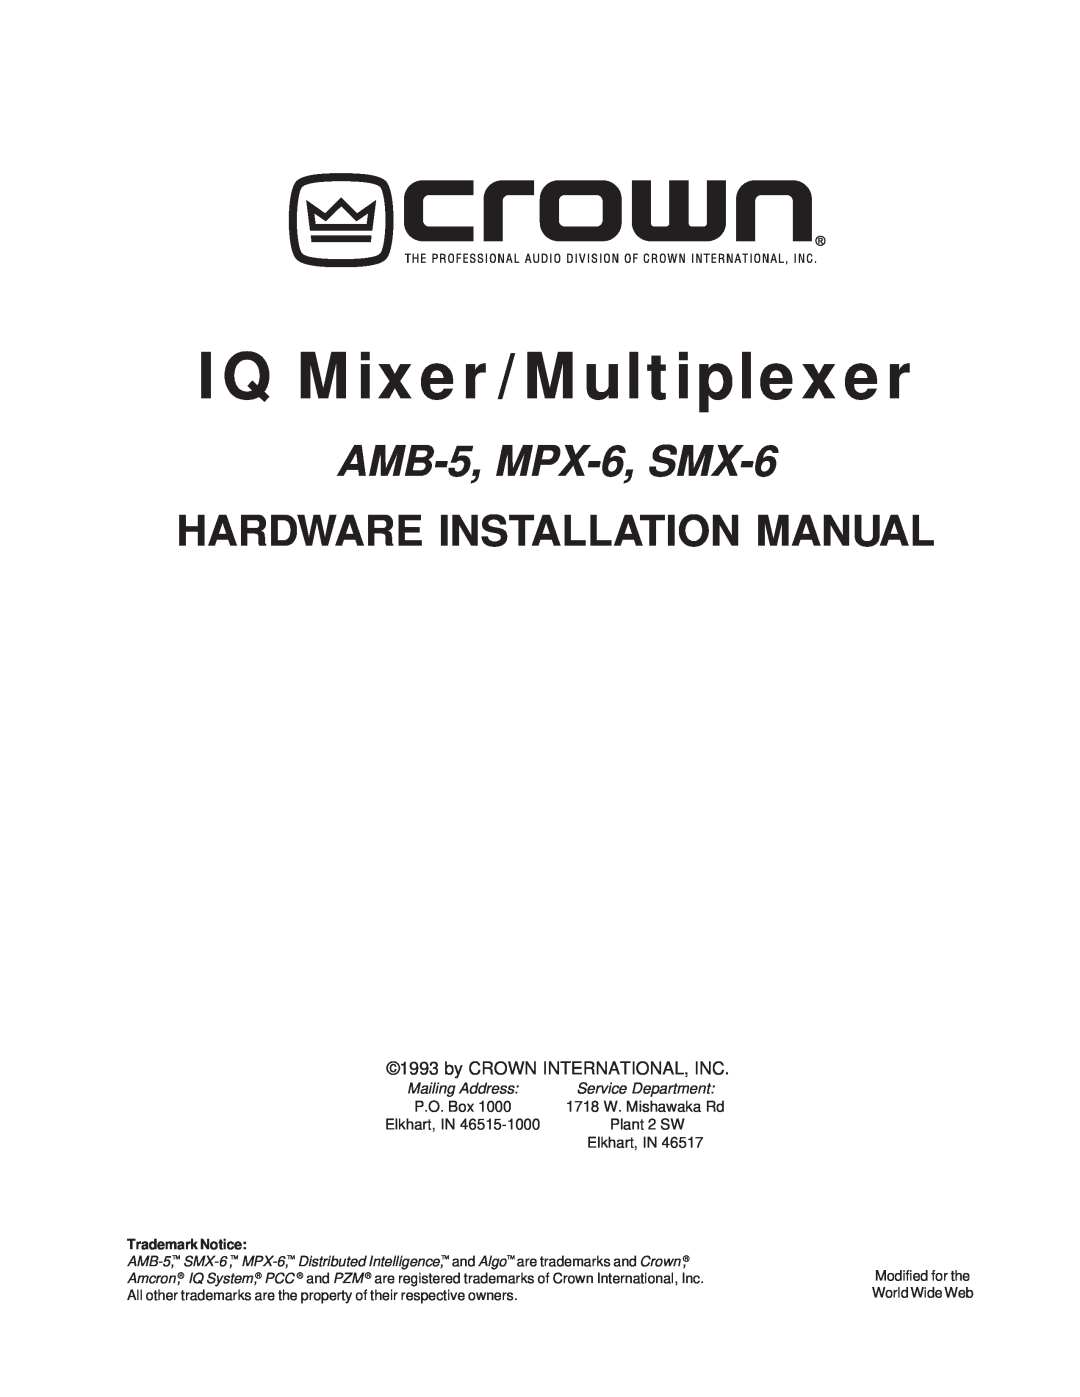 Crown installation manual Hardware Installation Manual, IQ Mixer/Multiplexer, AMB-5, MPX-6, SMX-6, Trademark Notice 